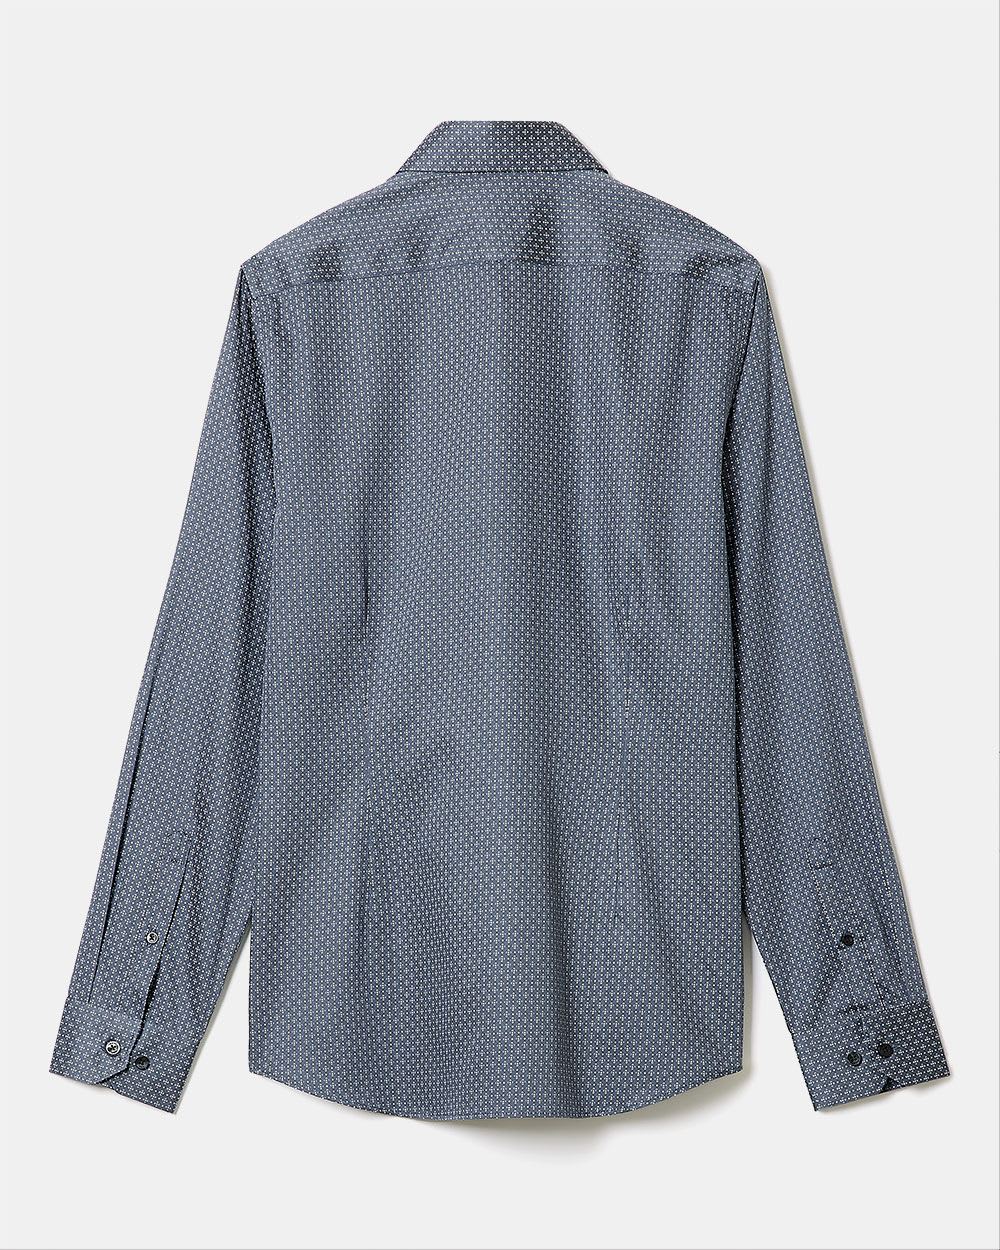 Slim-Fit Dress Shirt with Micro Mosaic Pattern | RW&CO.